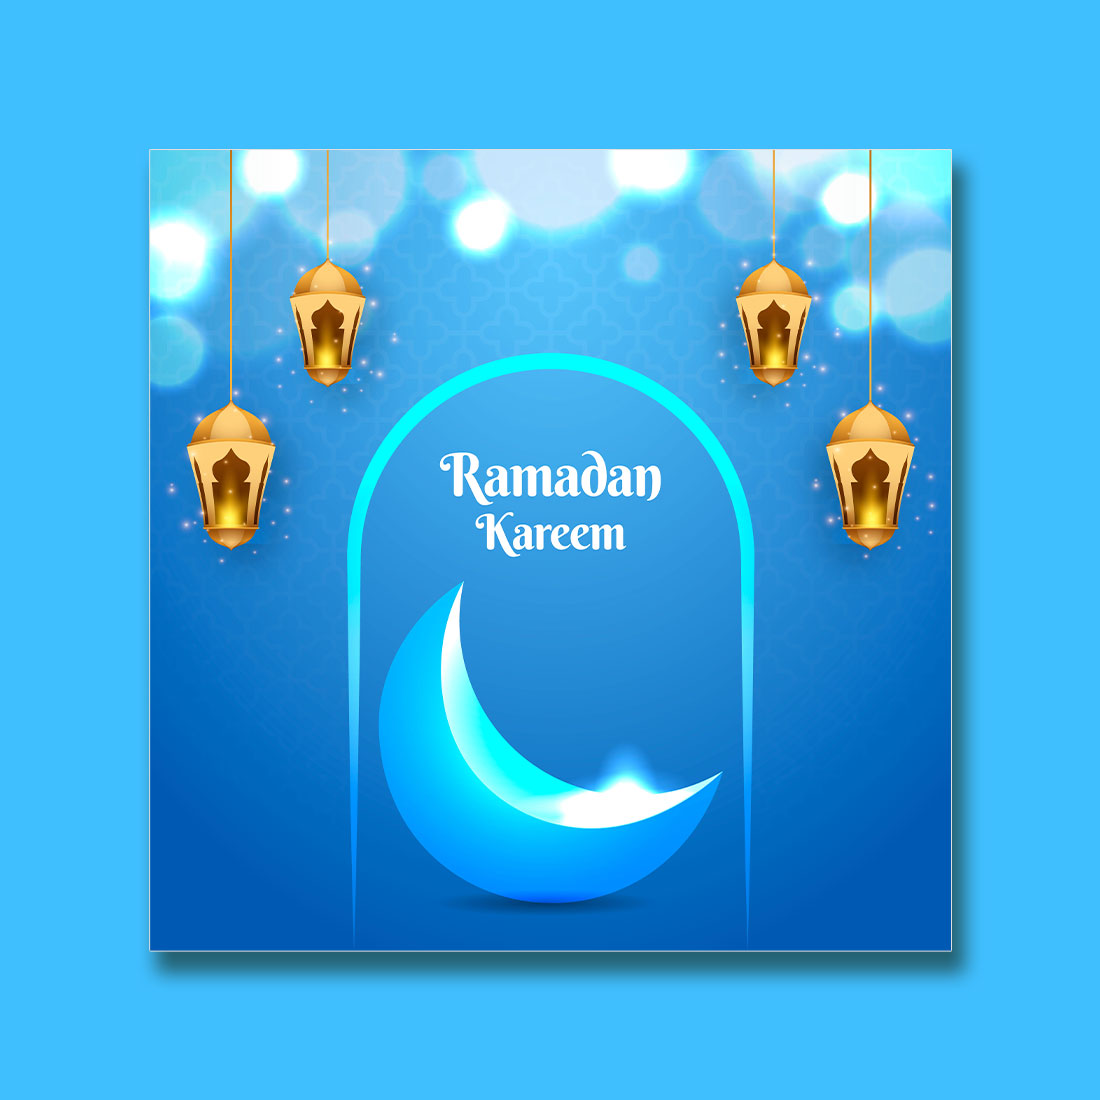 Ramadan Kareem traditional Islamic festival religious social media banner preview image.